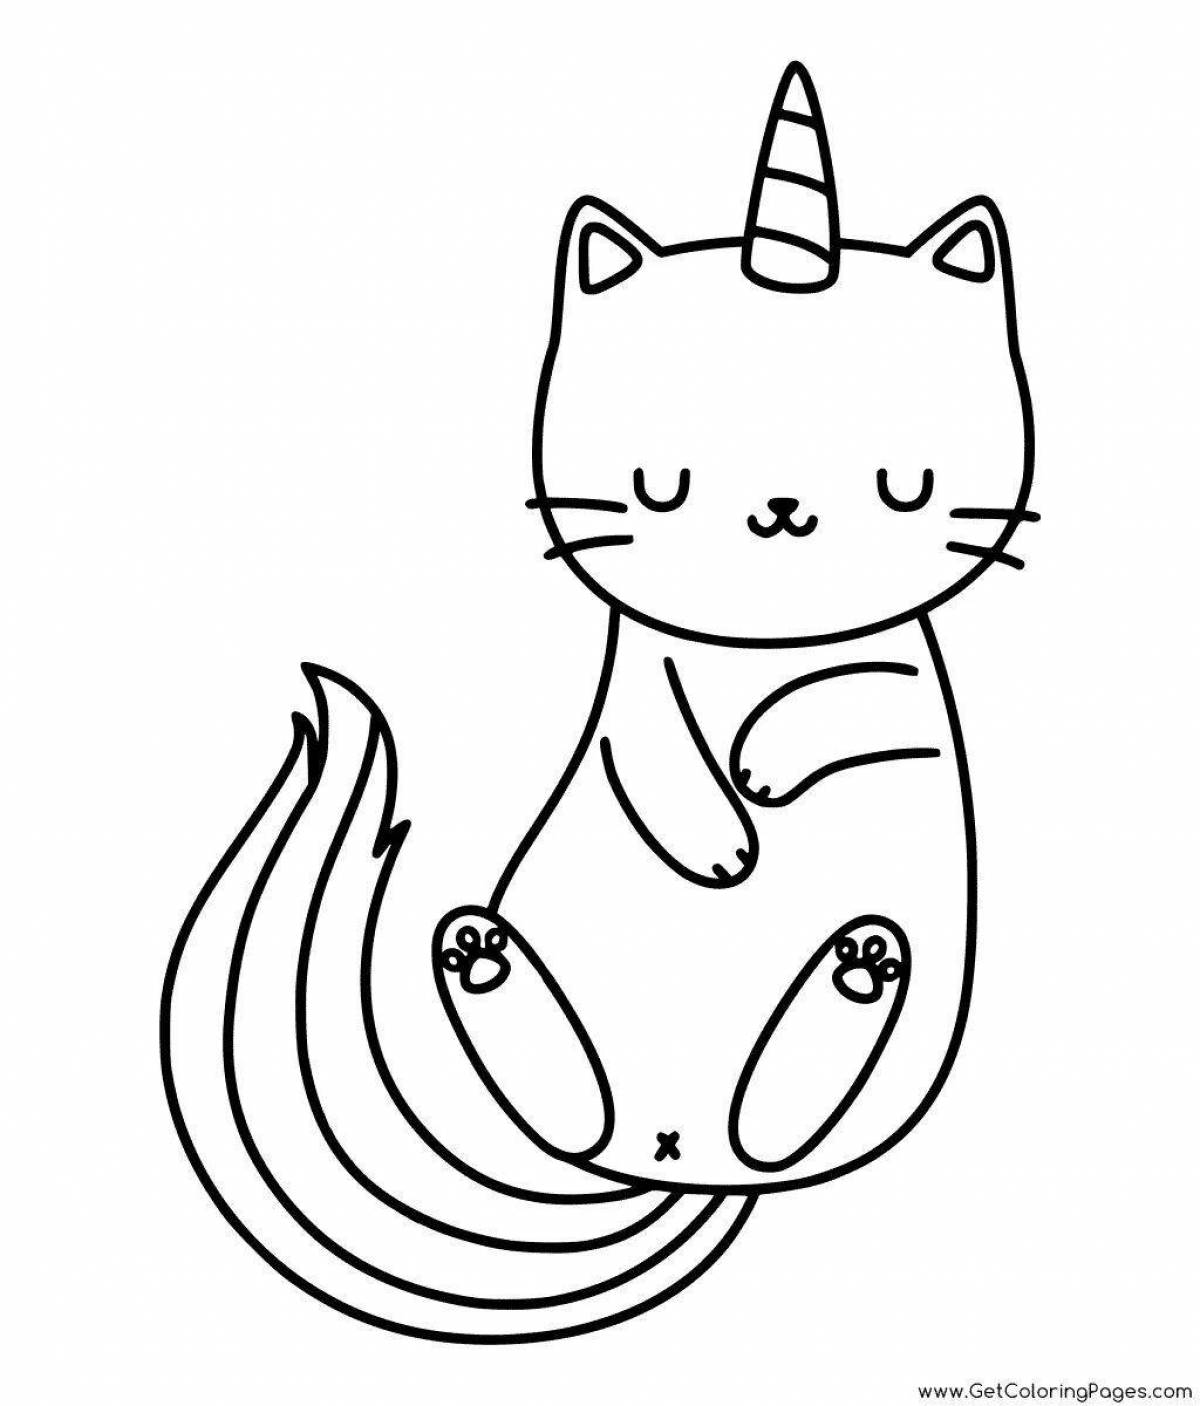 Adorable unicorn cat coloring book